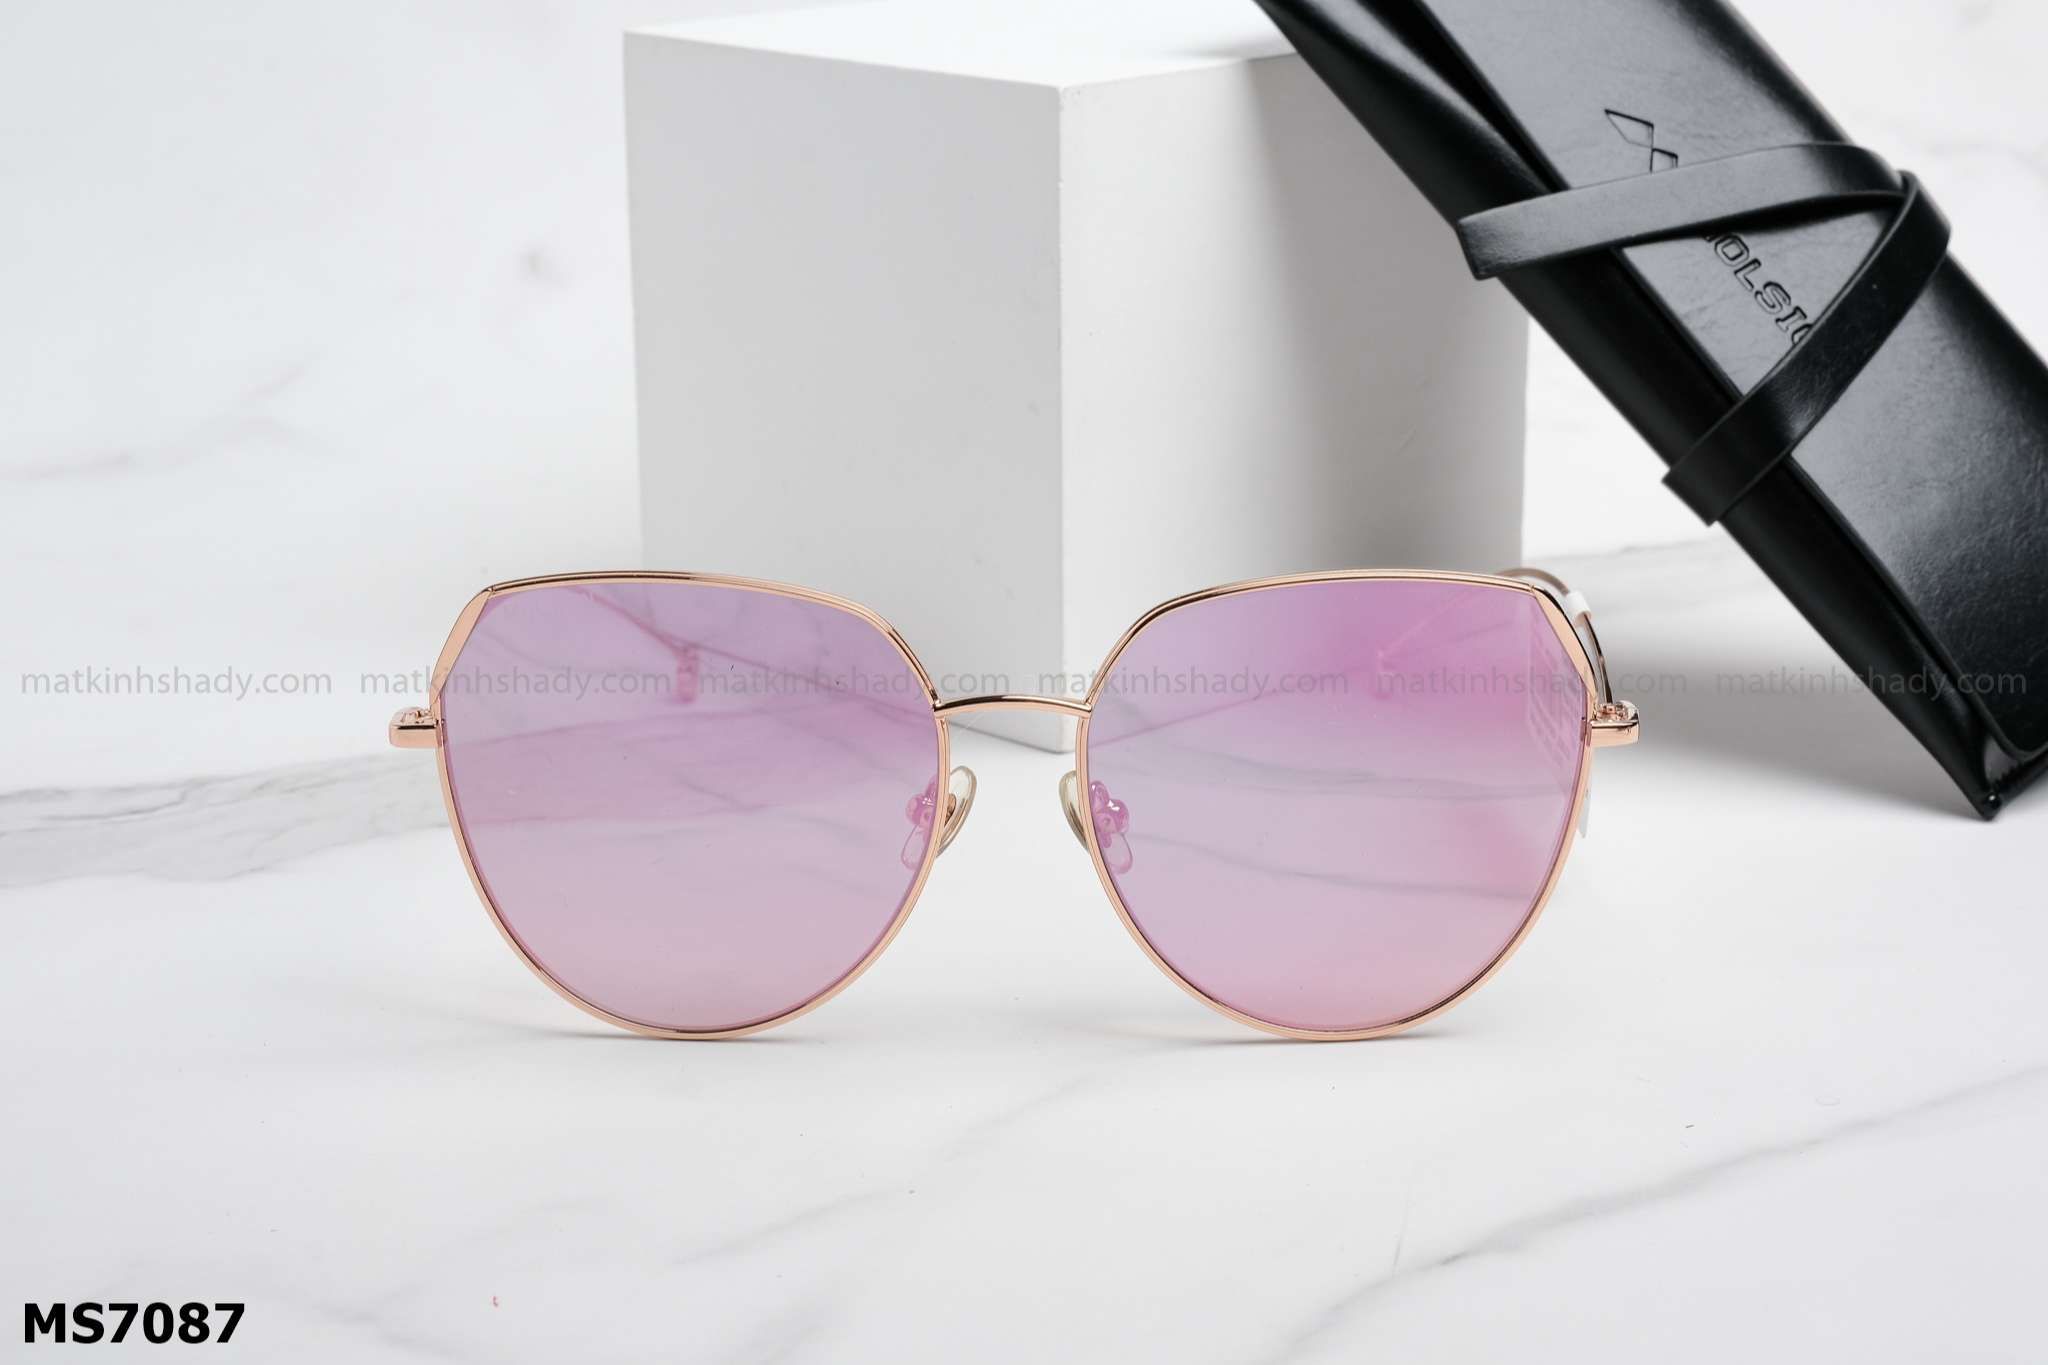  Molsion Eyewear - Sunglasses - MS7087 